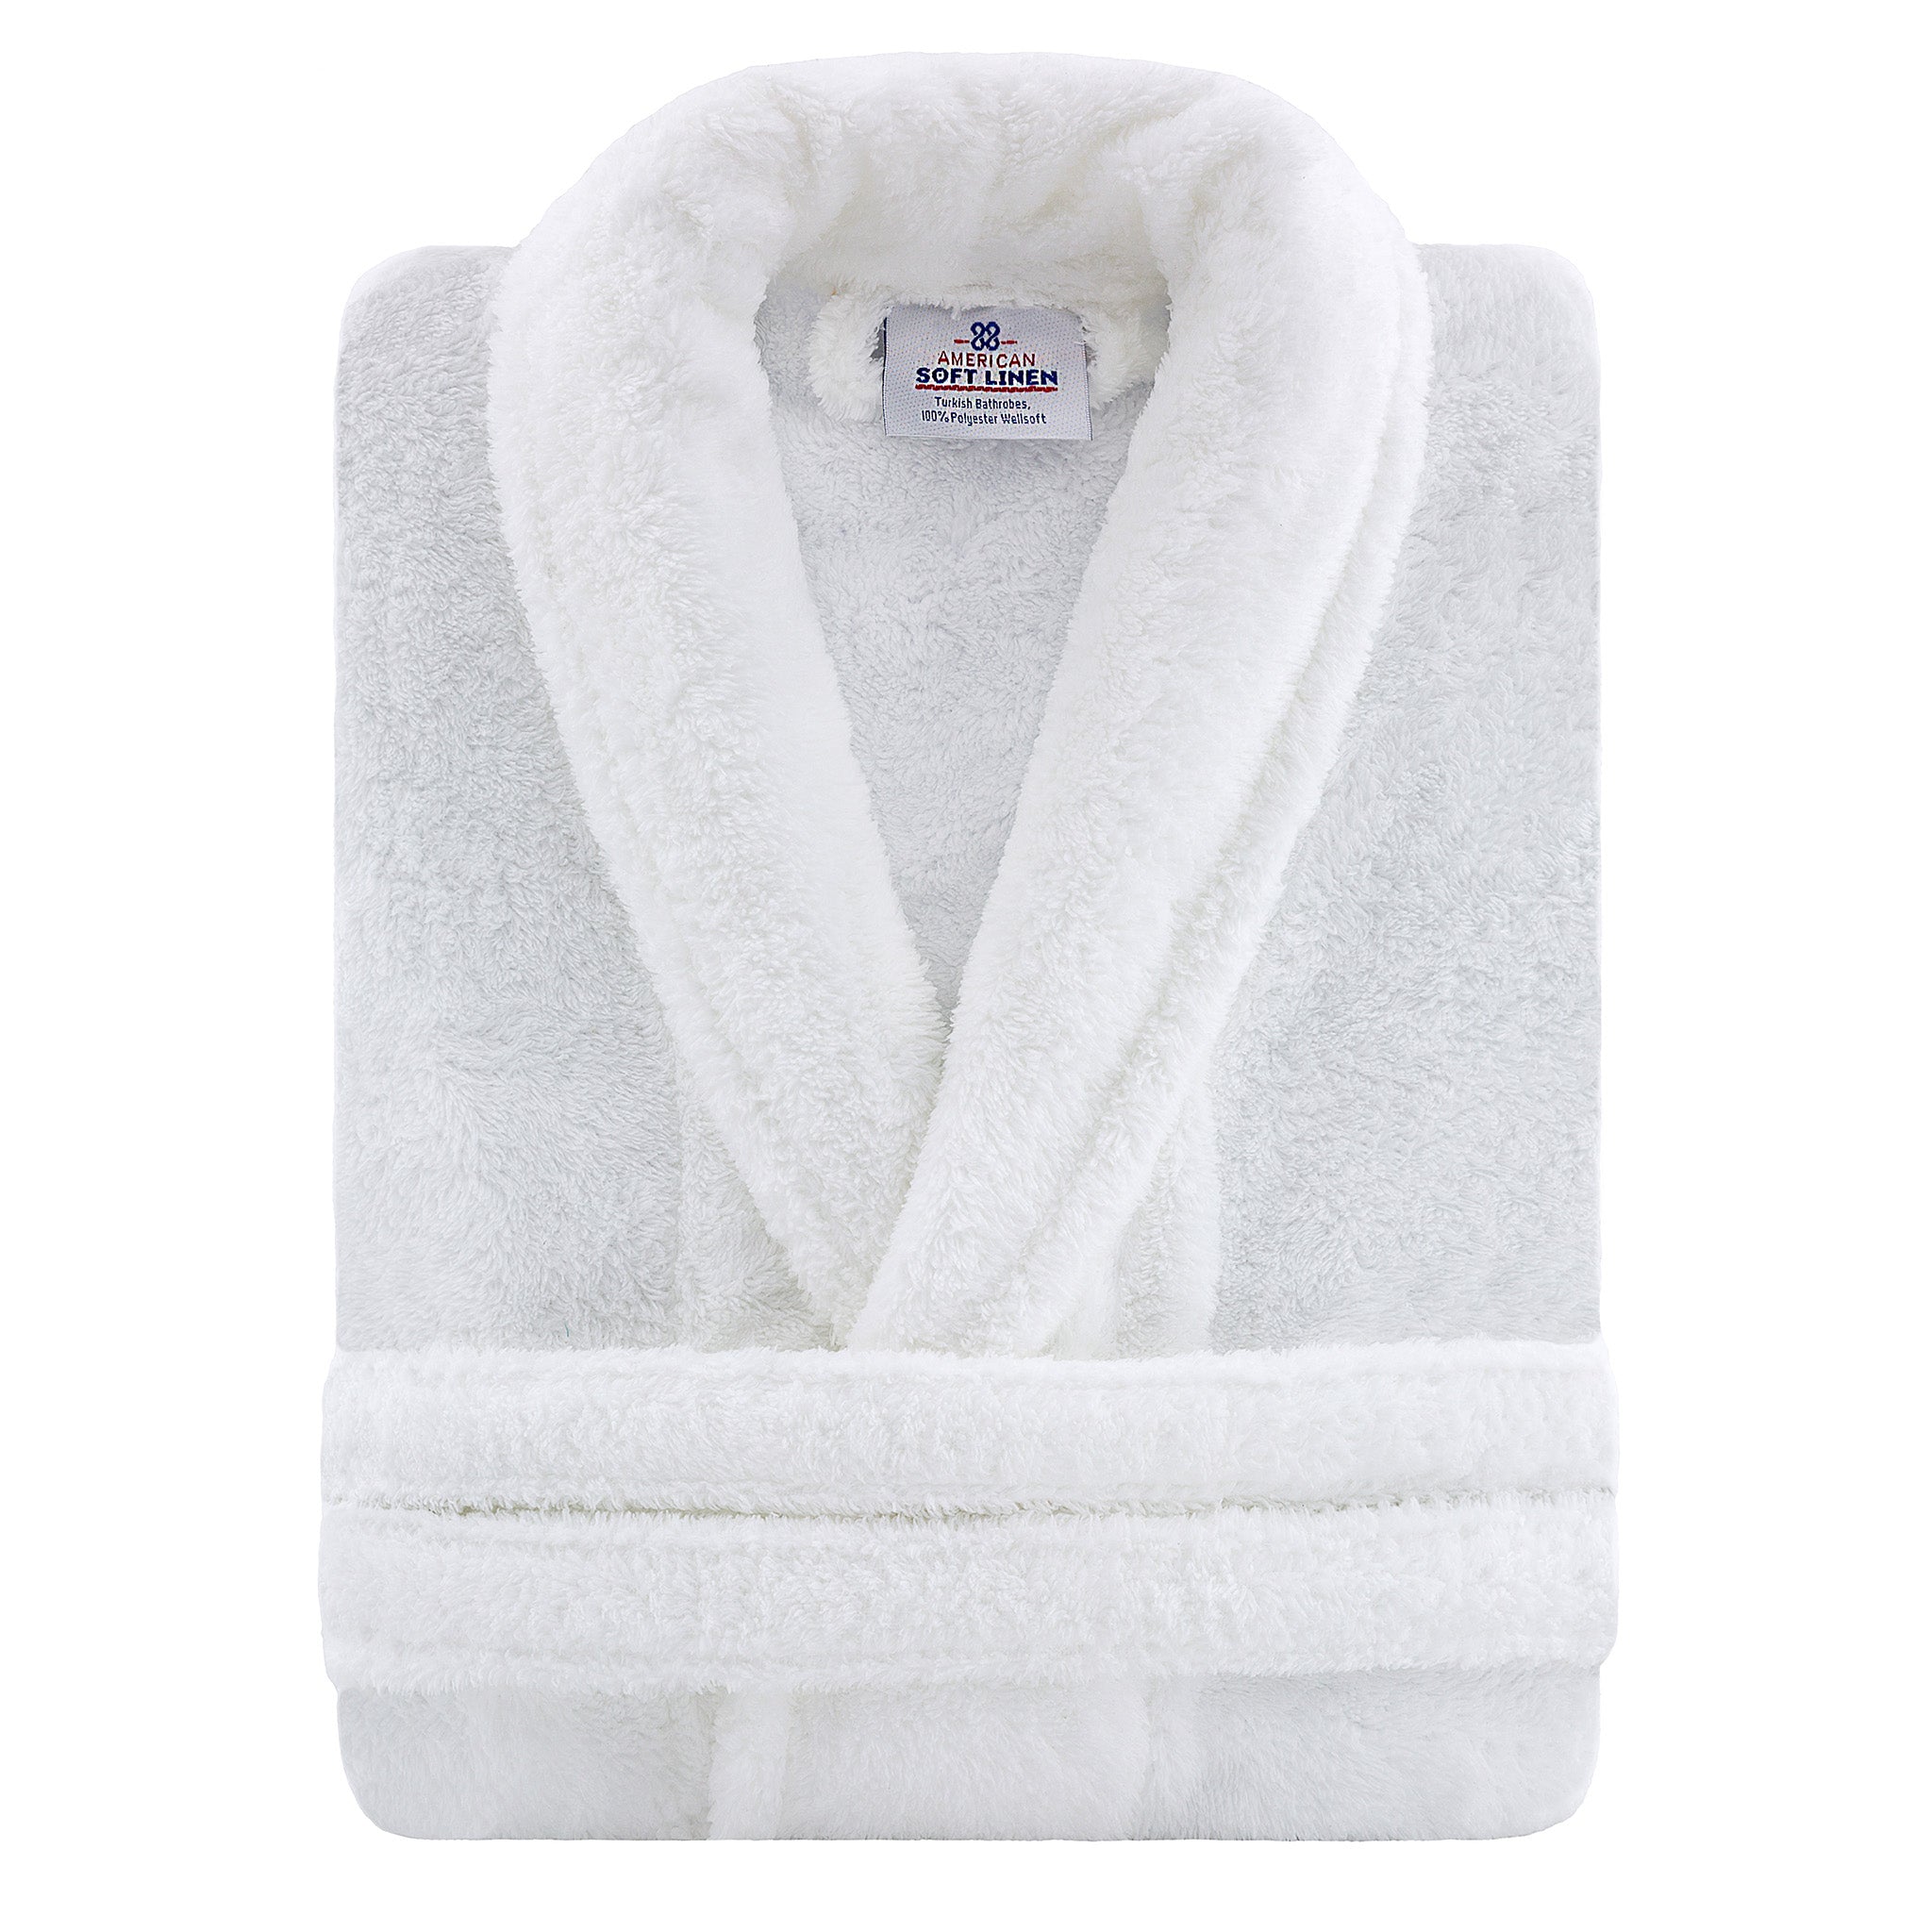 American Soft Linen Super Soft Absorbent and Fluffy Unisex Fleece Bathrobe -12 Set Case Pack -L-XL-white-3